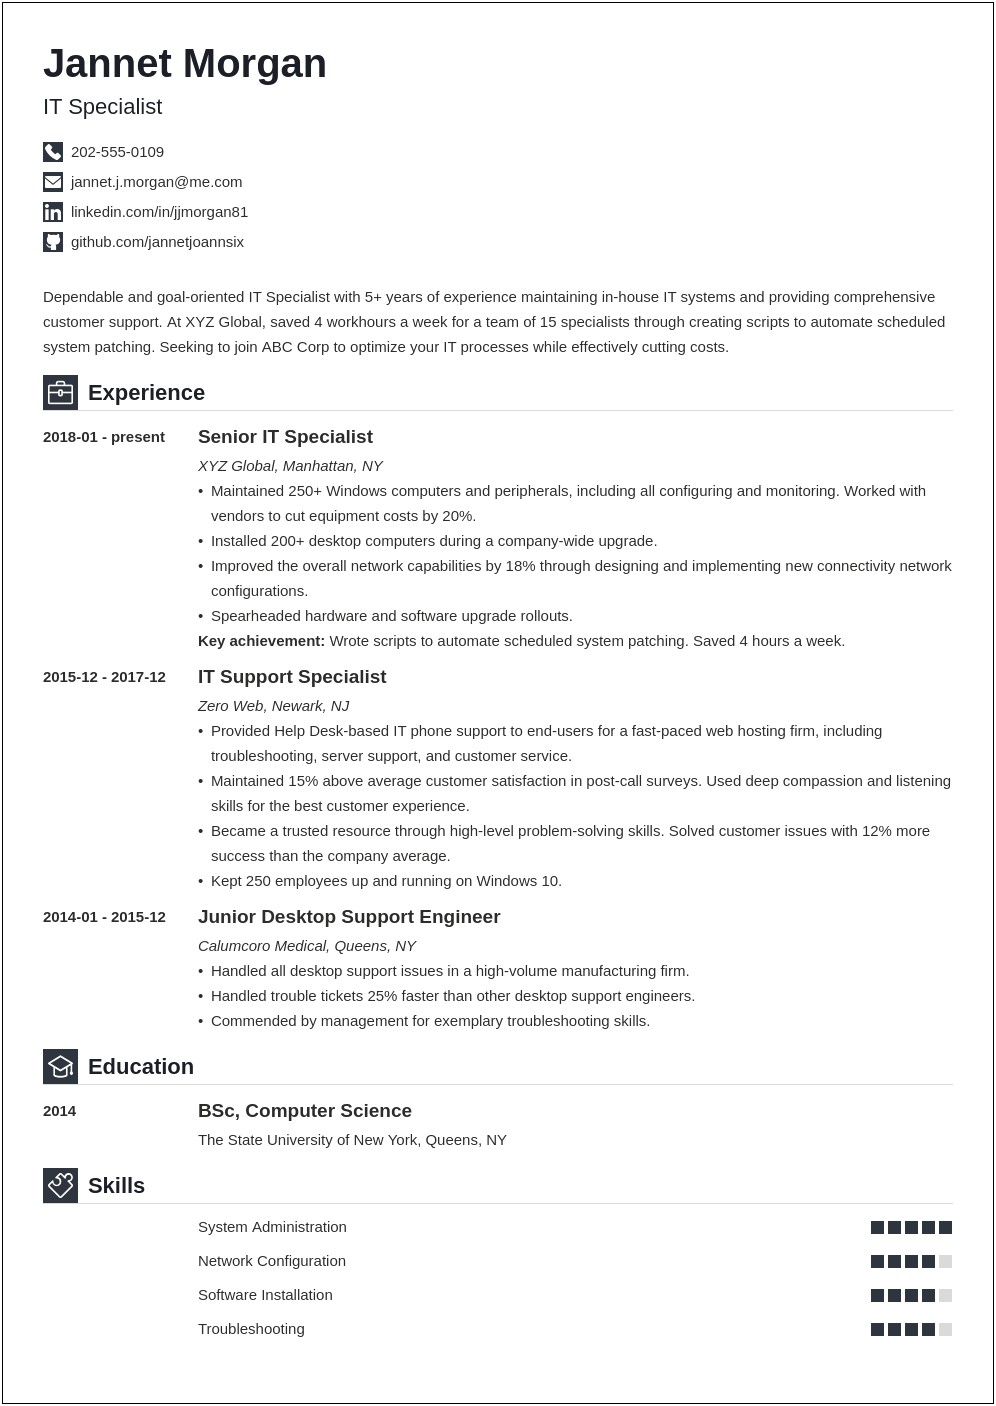 T Mobile Account Expert Job Discription For Resume